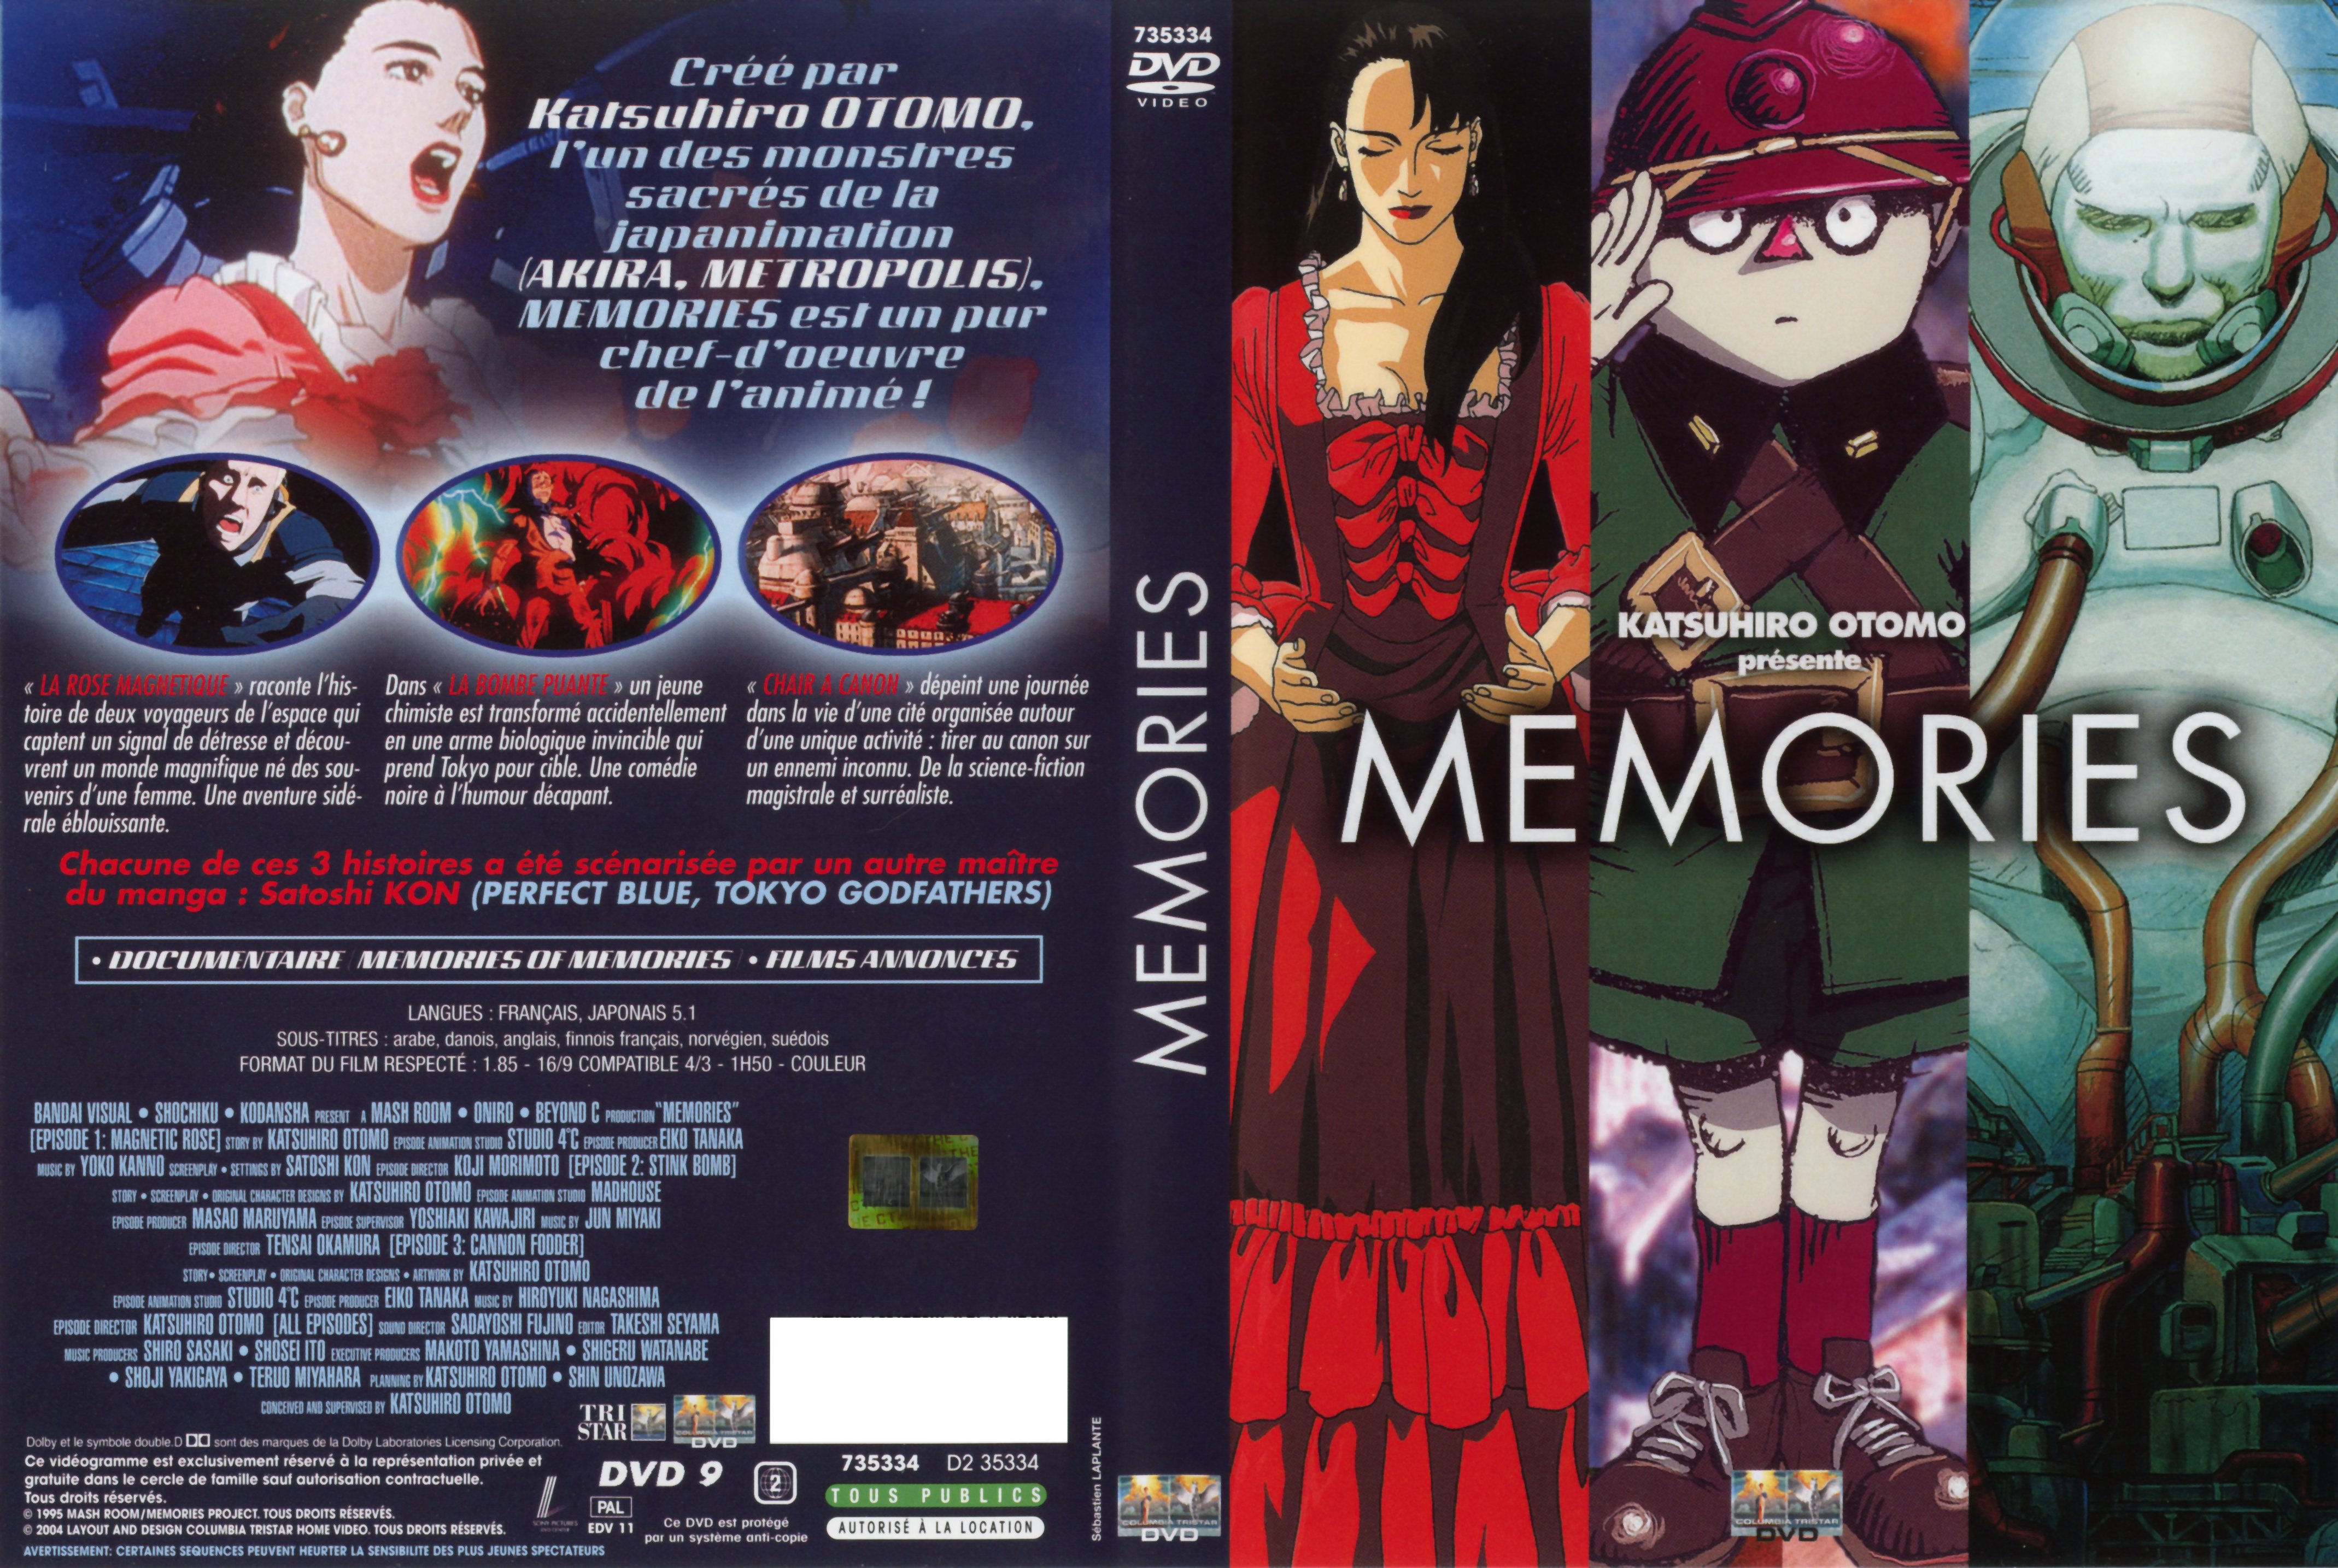 Jaquette DVD Memories DA